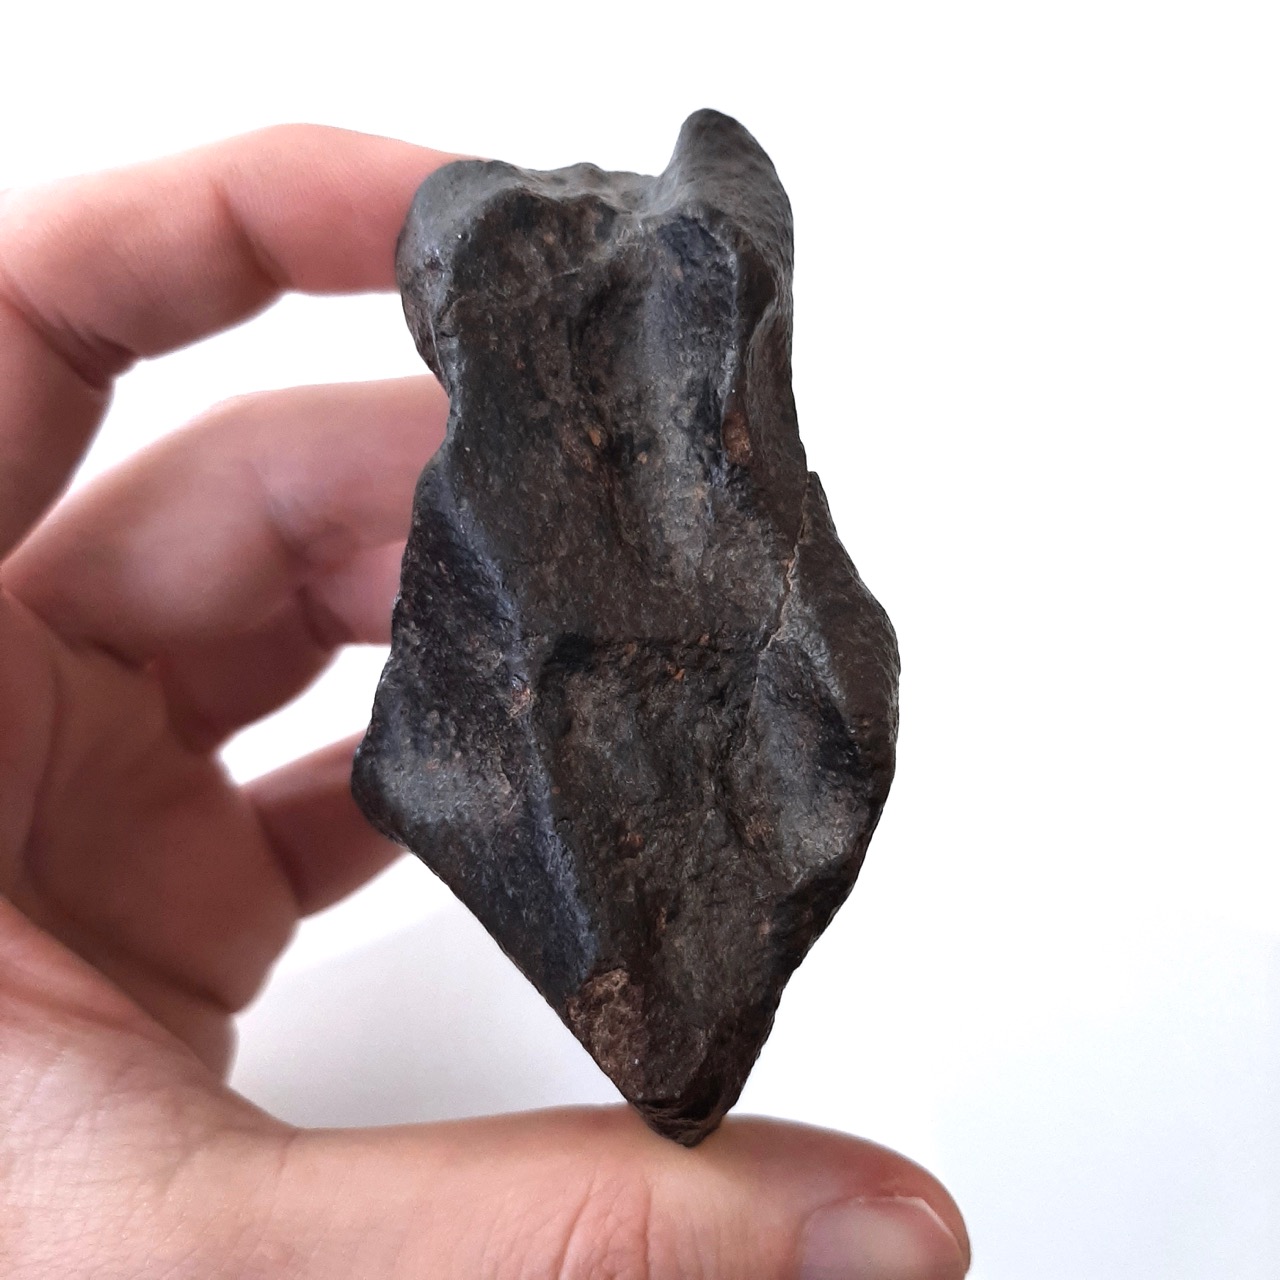 Chondrite meteorite. Nice shape.